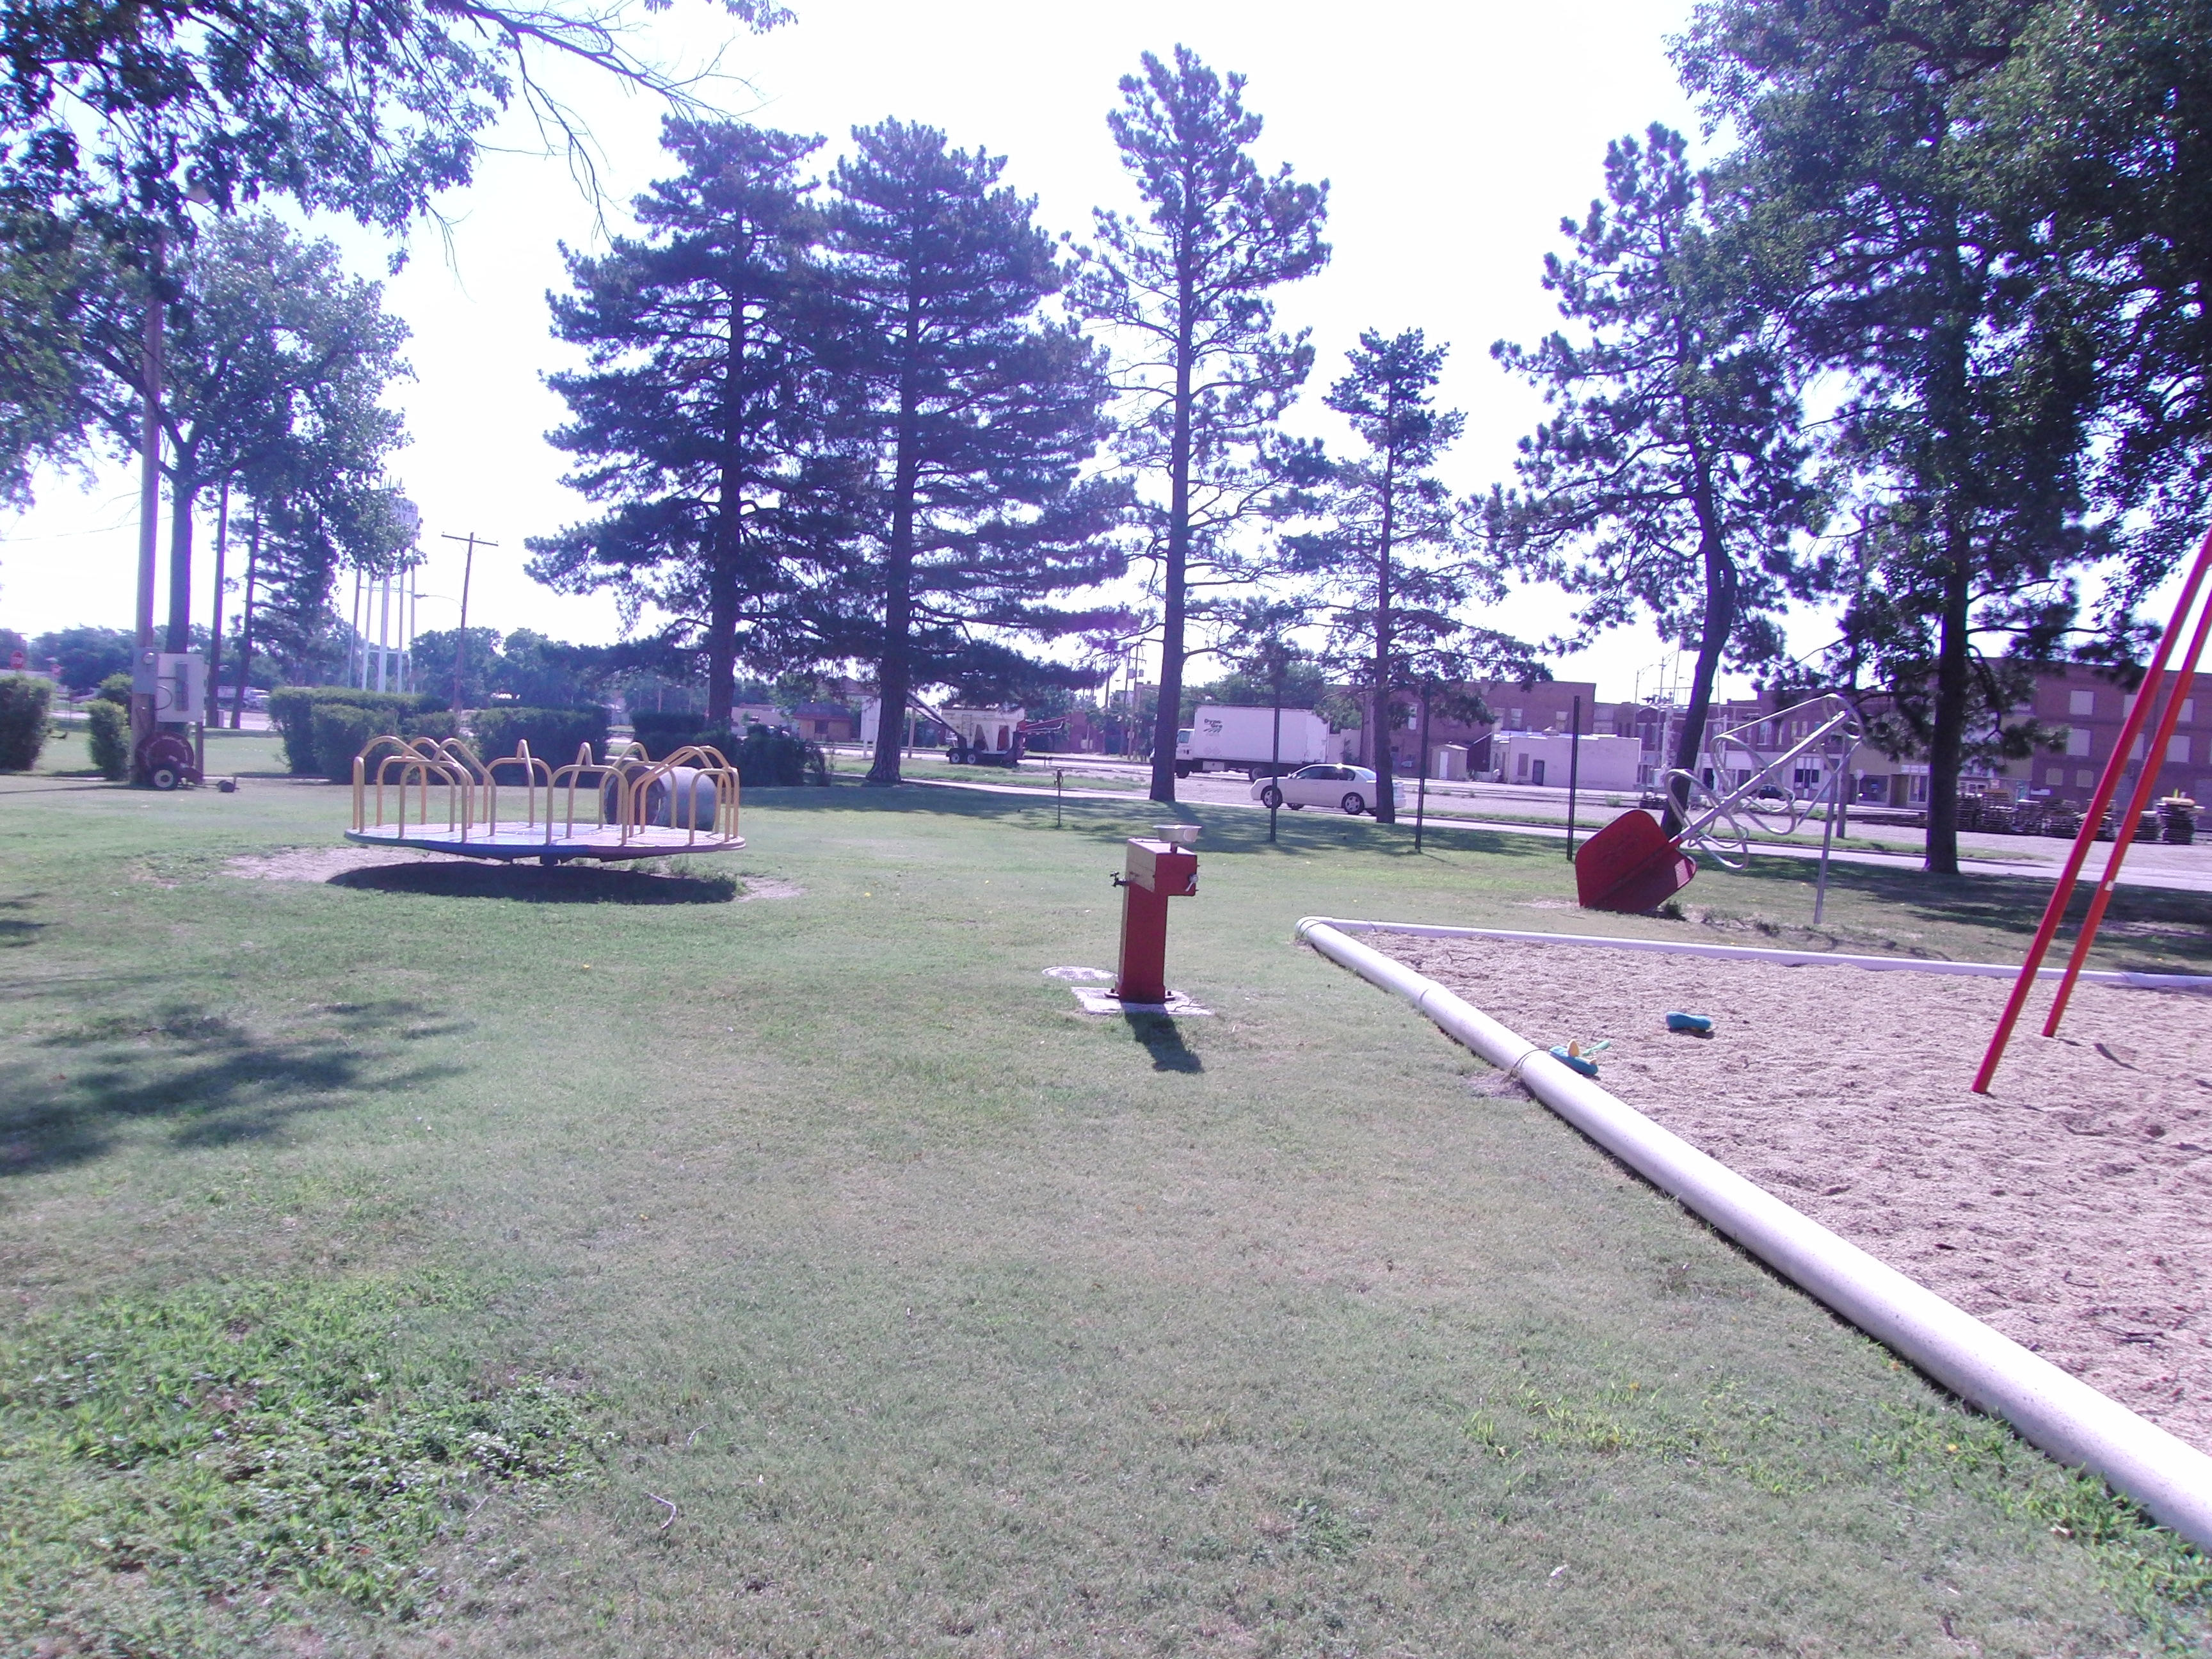 Playground equipment at Baugher Park